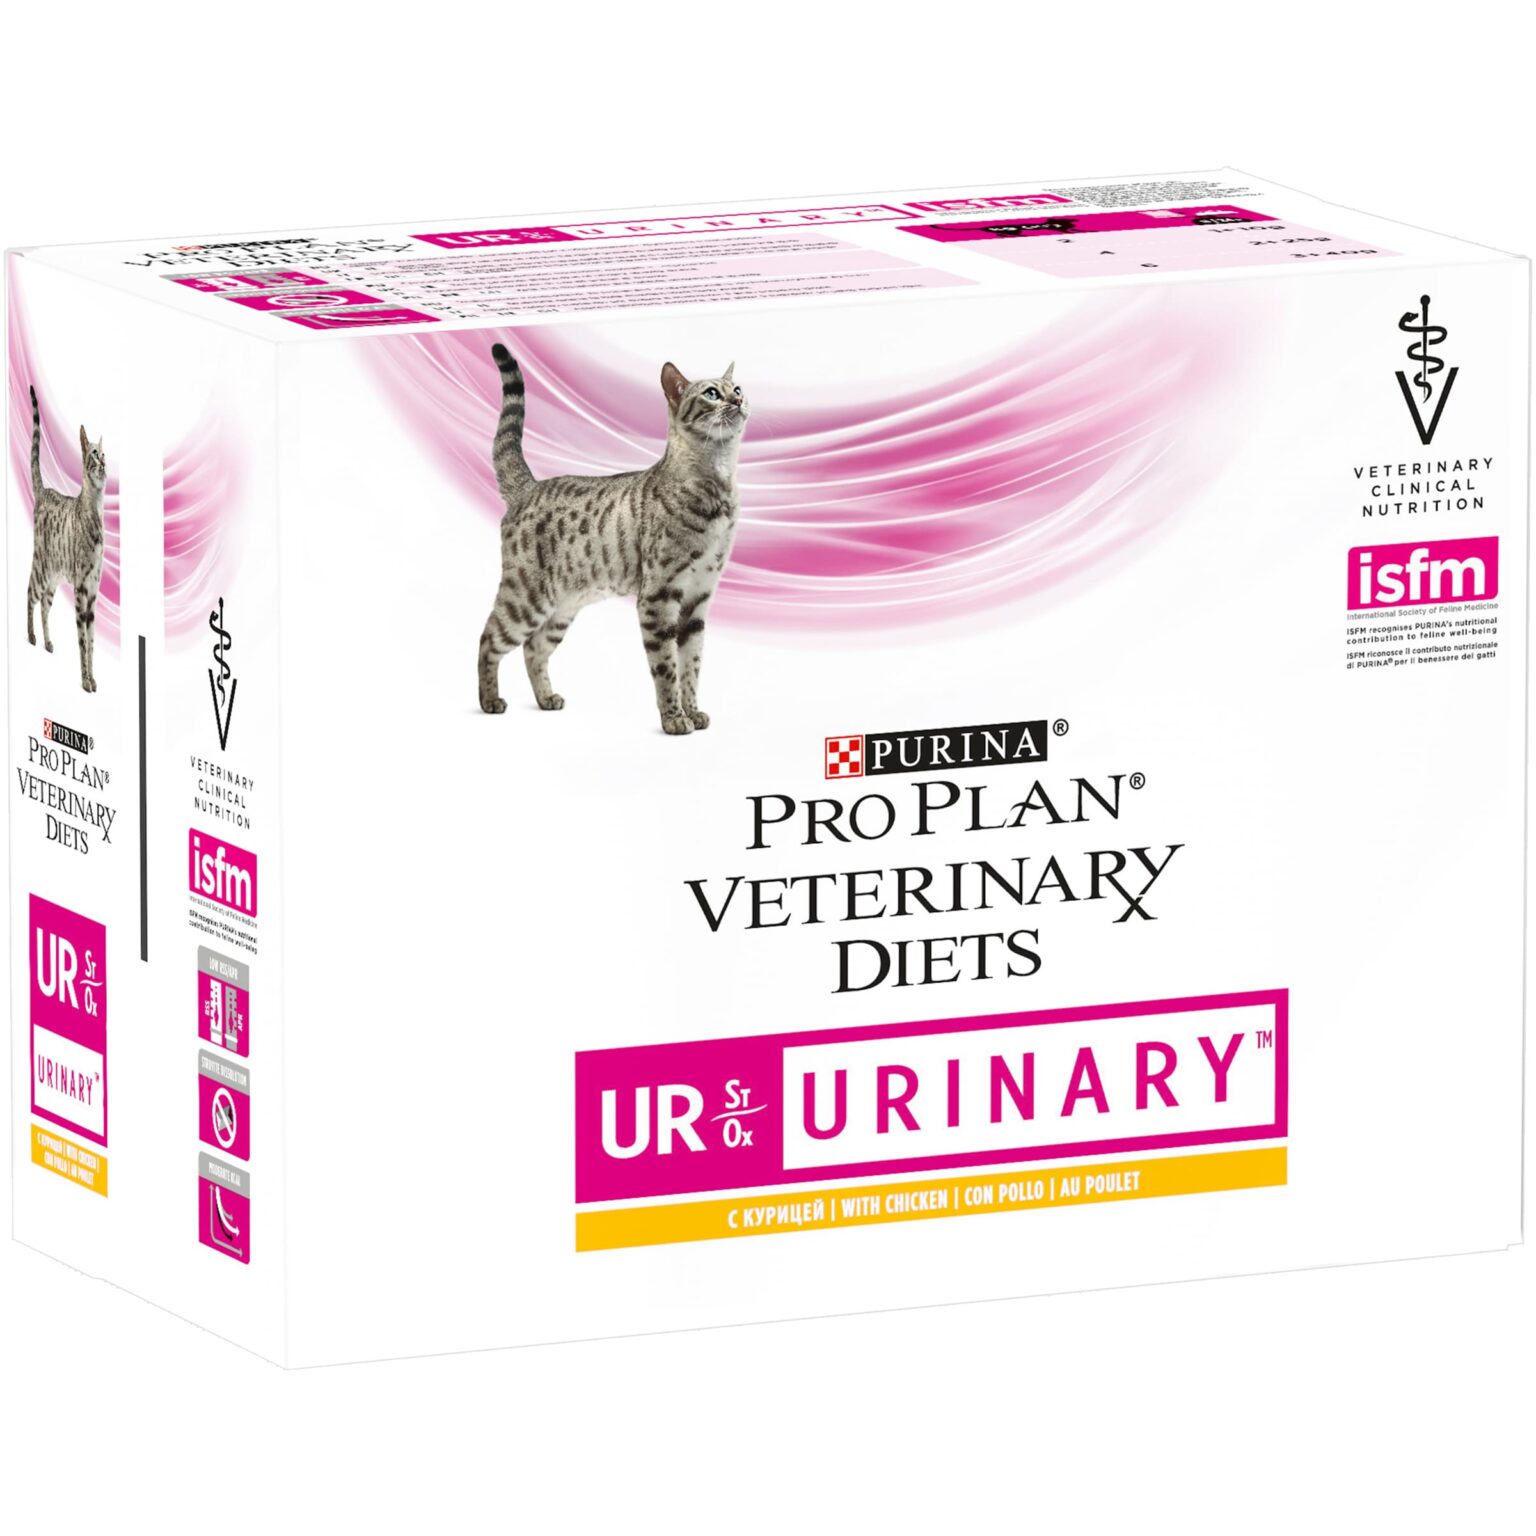 Pro plan veterinary urinary для кошек. Purina Urinary. Urinary для кошек. Pro Plan Urinary для кошек. Влажный корм для кошек Уринари.